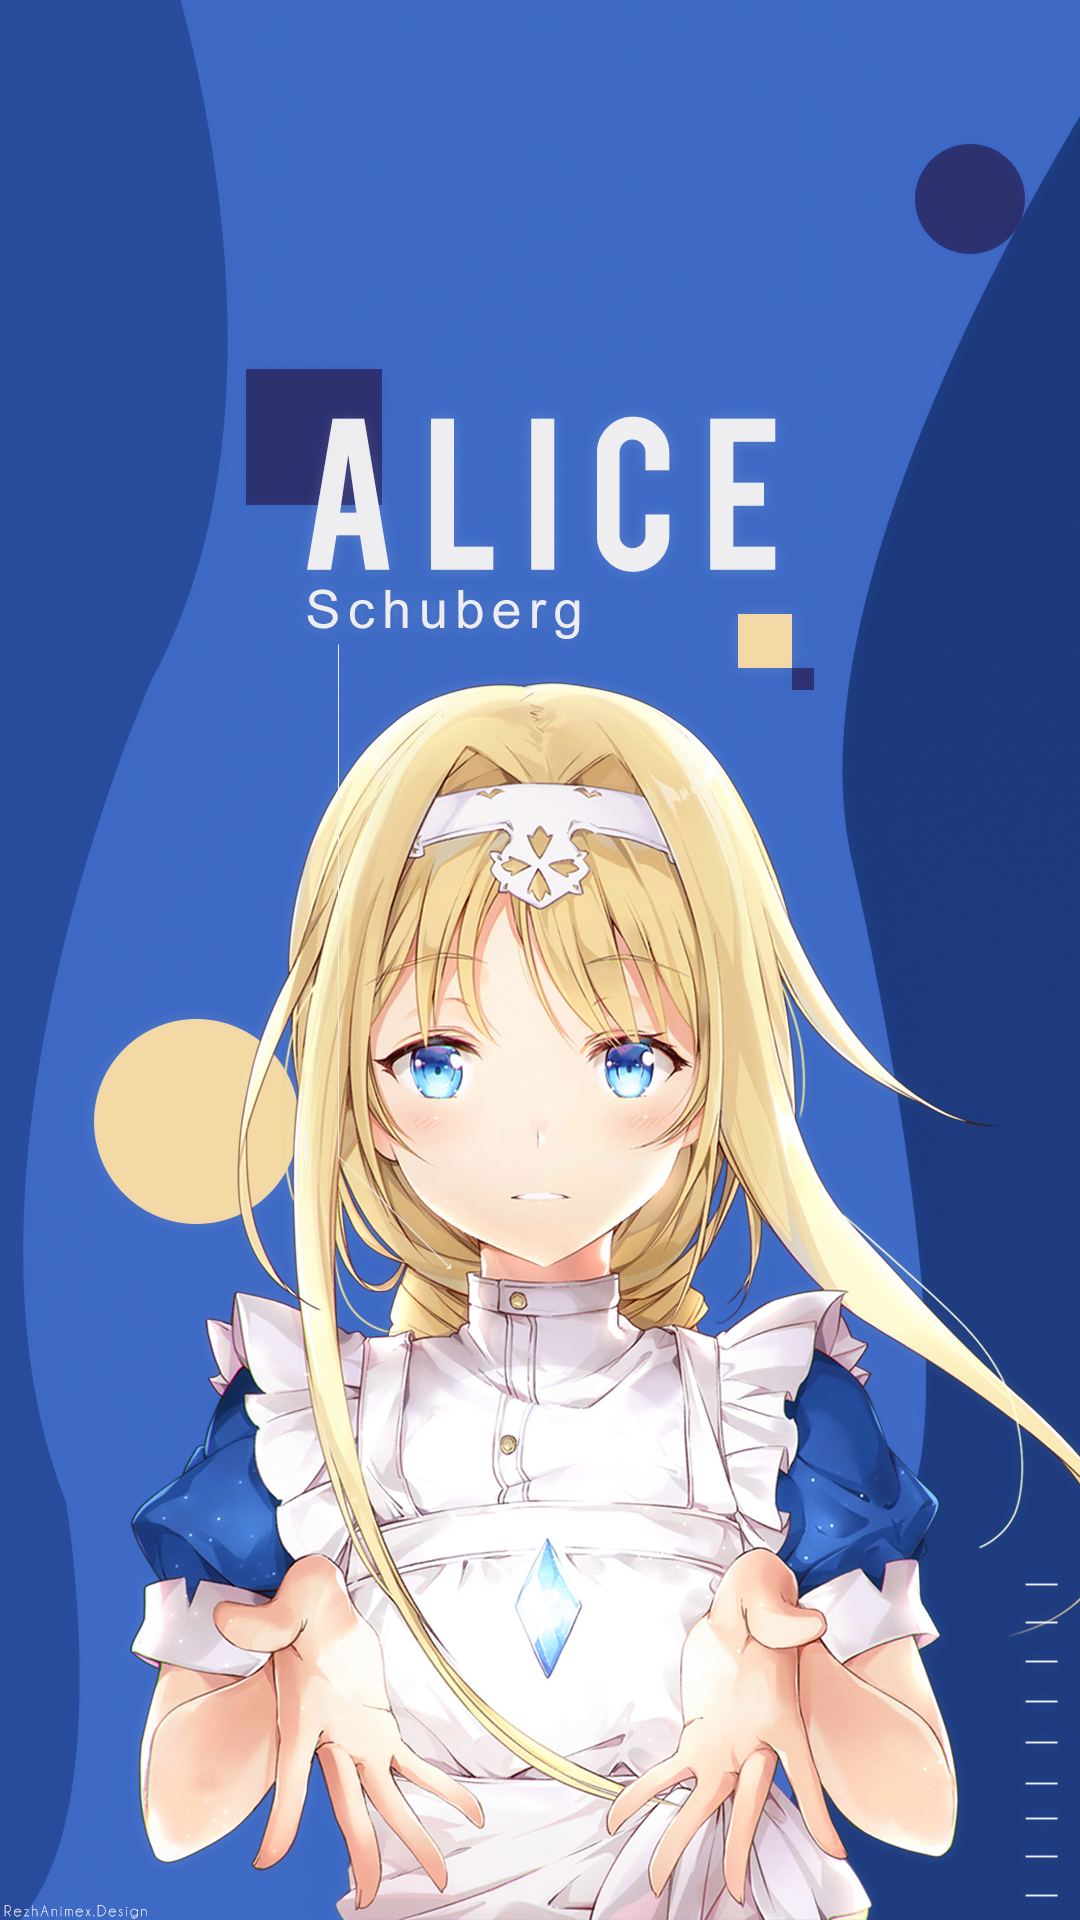 Alice Schuberg | Wallpaper Android by AchzatrafScarlet on DeviantArt